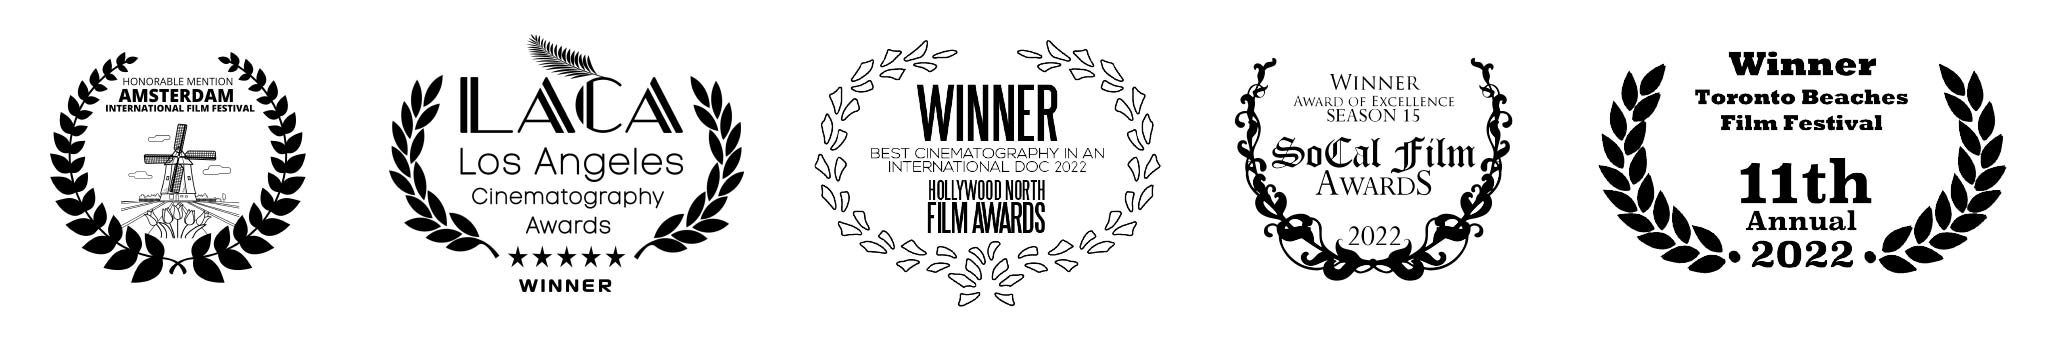 Minnesota Film Production Awards